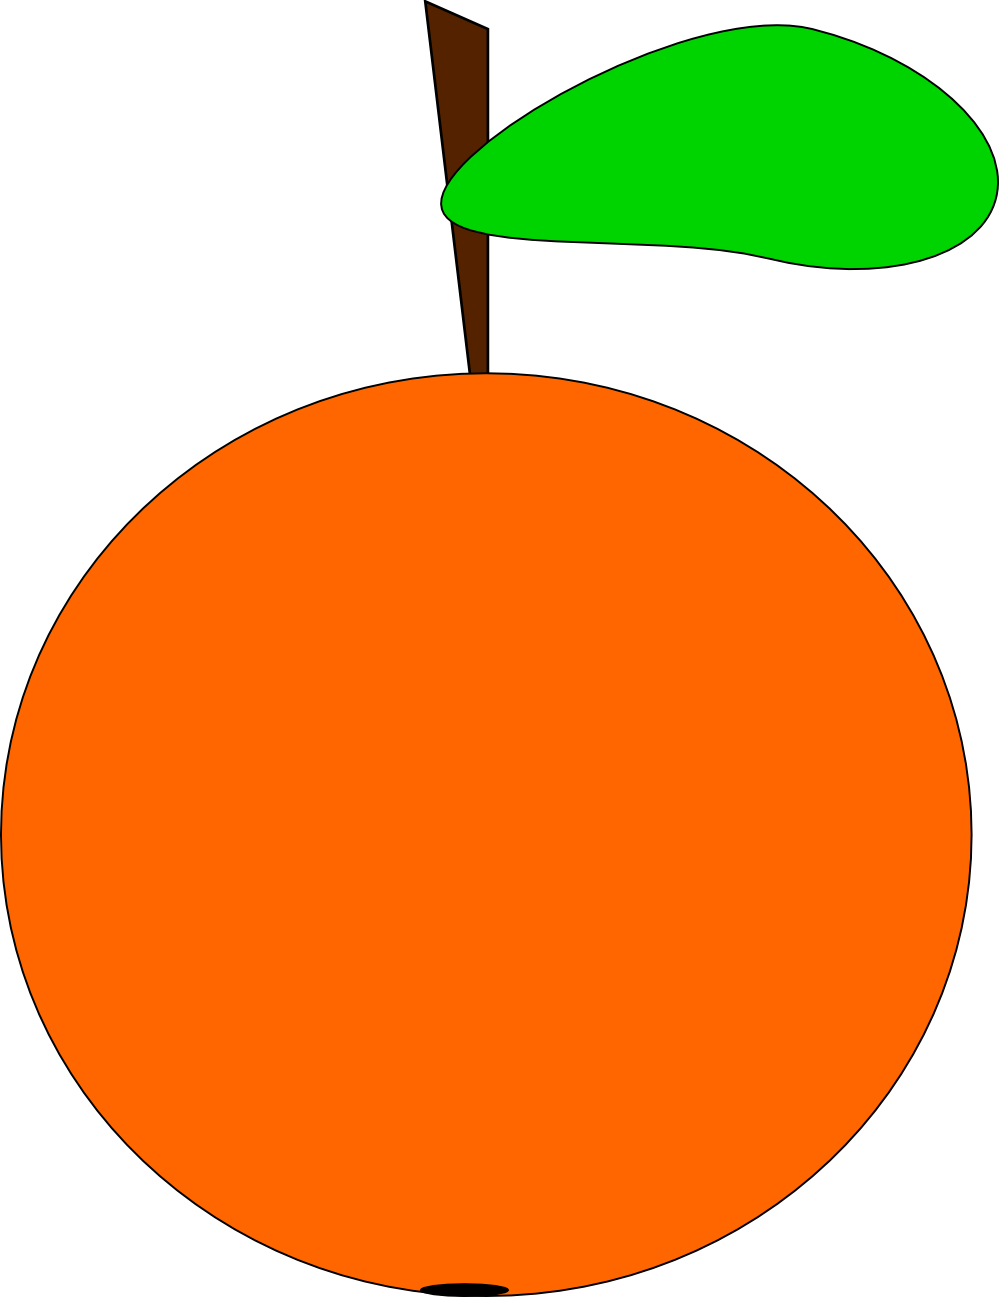 Pineapple Teal Orange Magenta Vegetables PNG